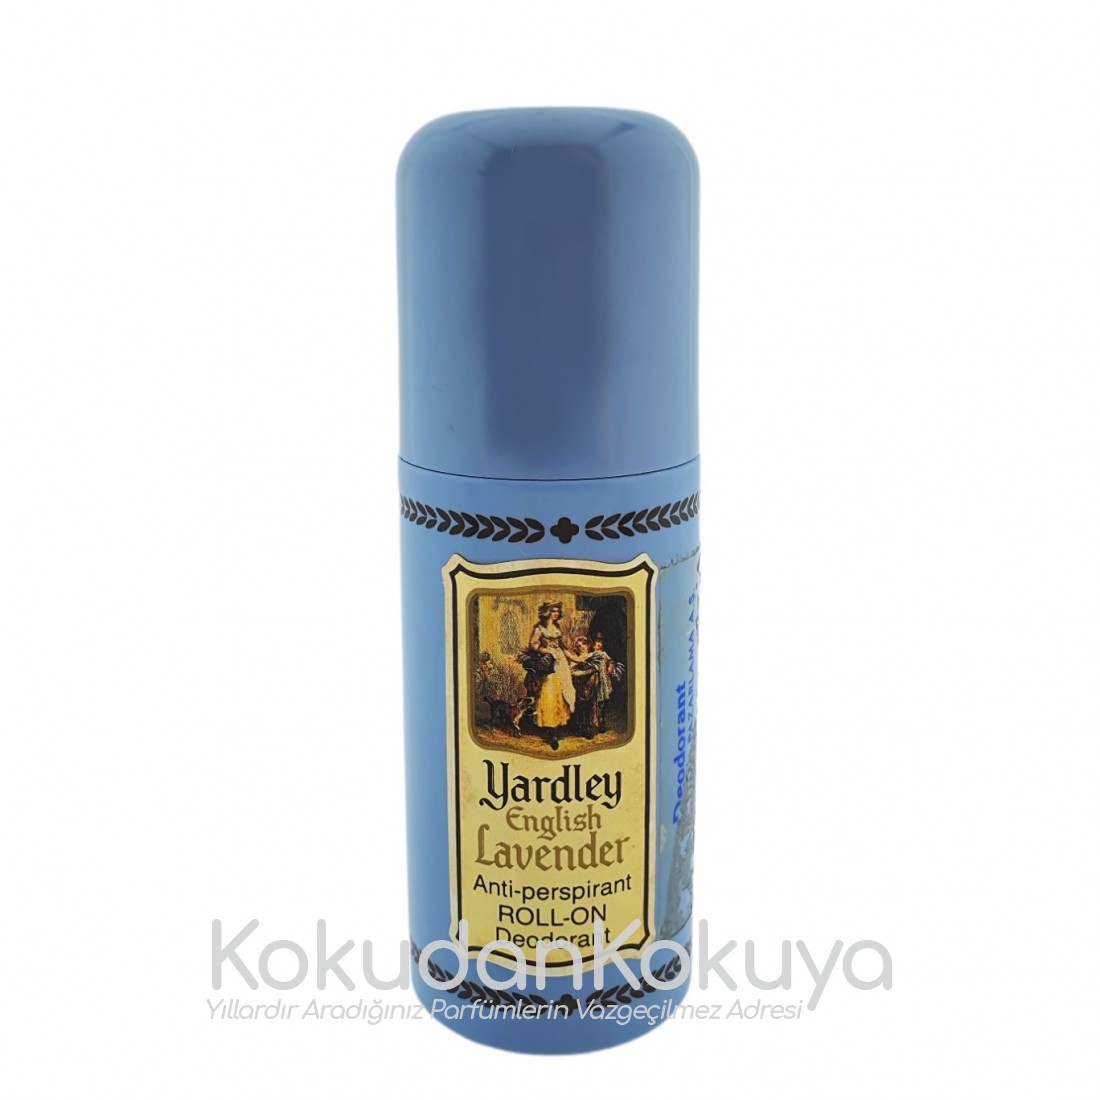 YARDLEY English Lavender (Vintage) Deodorant Kadın 50ml Deodorant Roll-on Dökme 